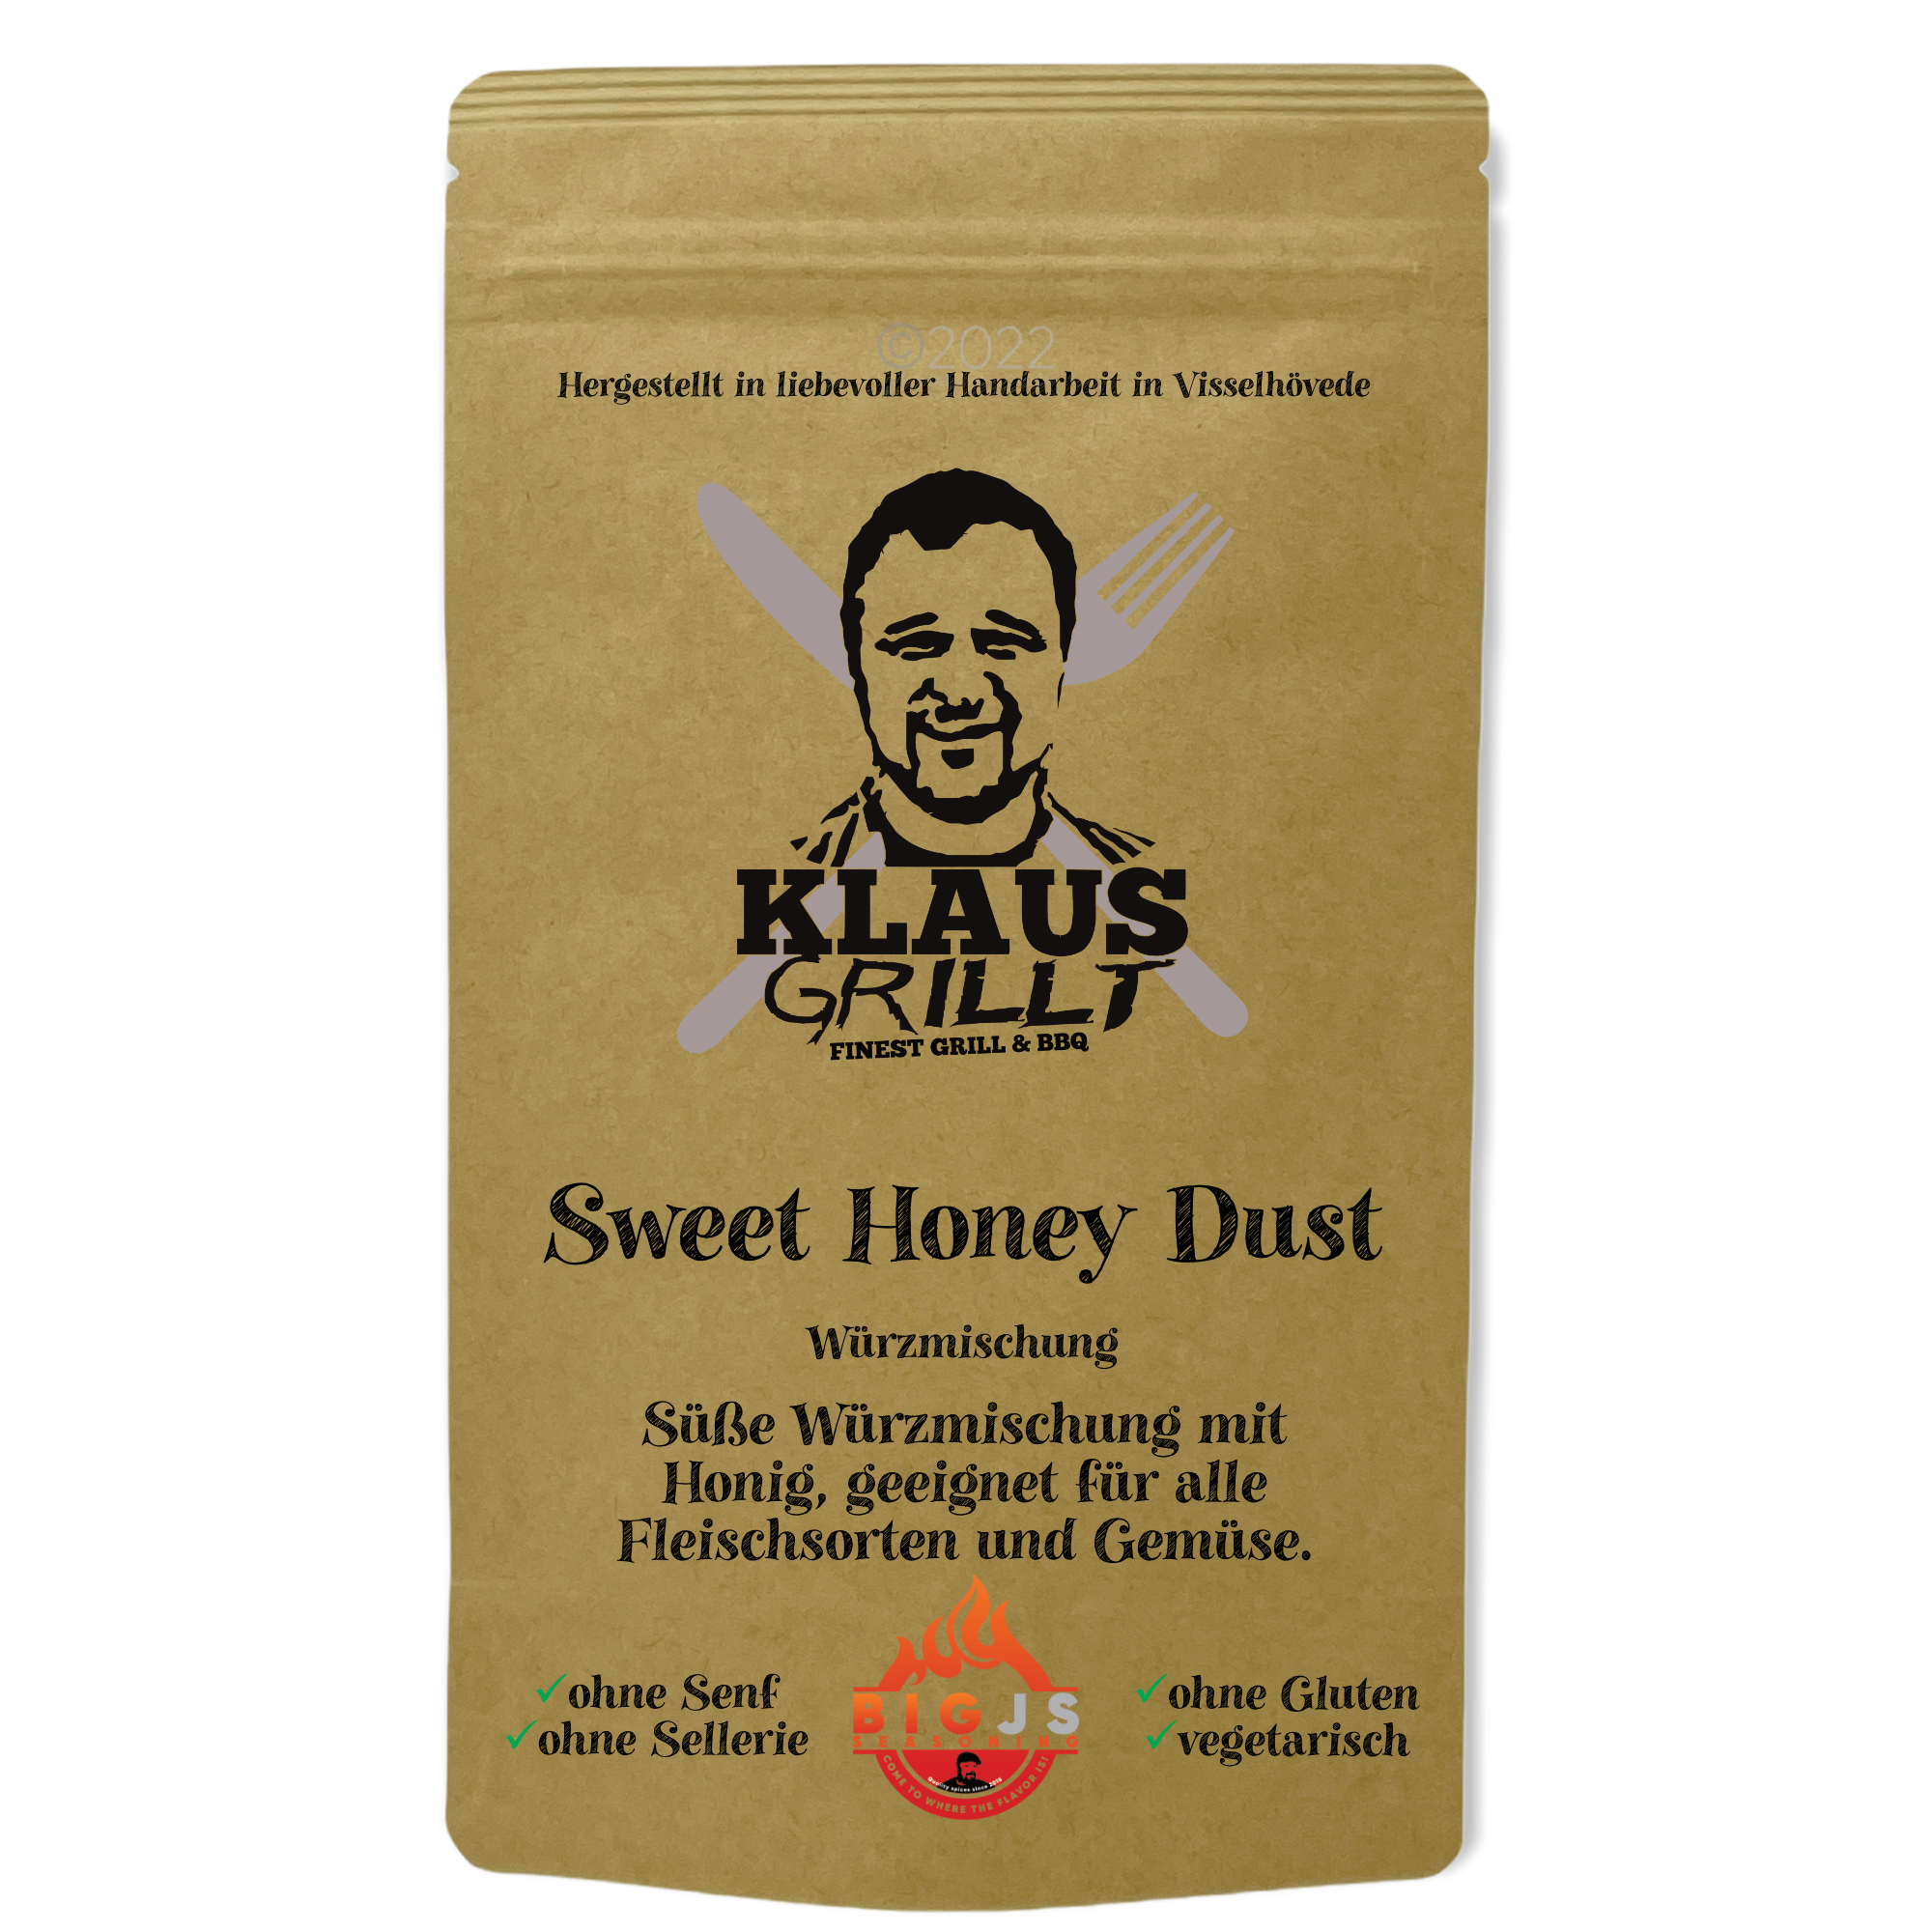 Klaus Grillt - Sweet Honey Dust 250g Beutel